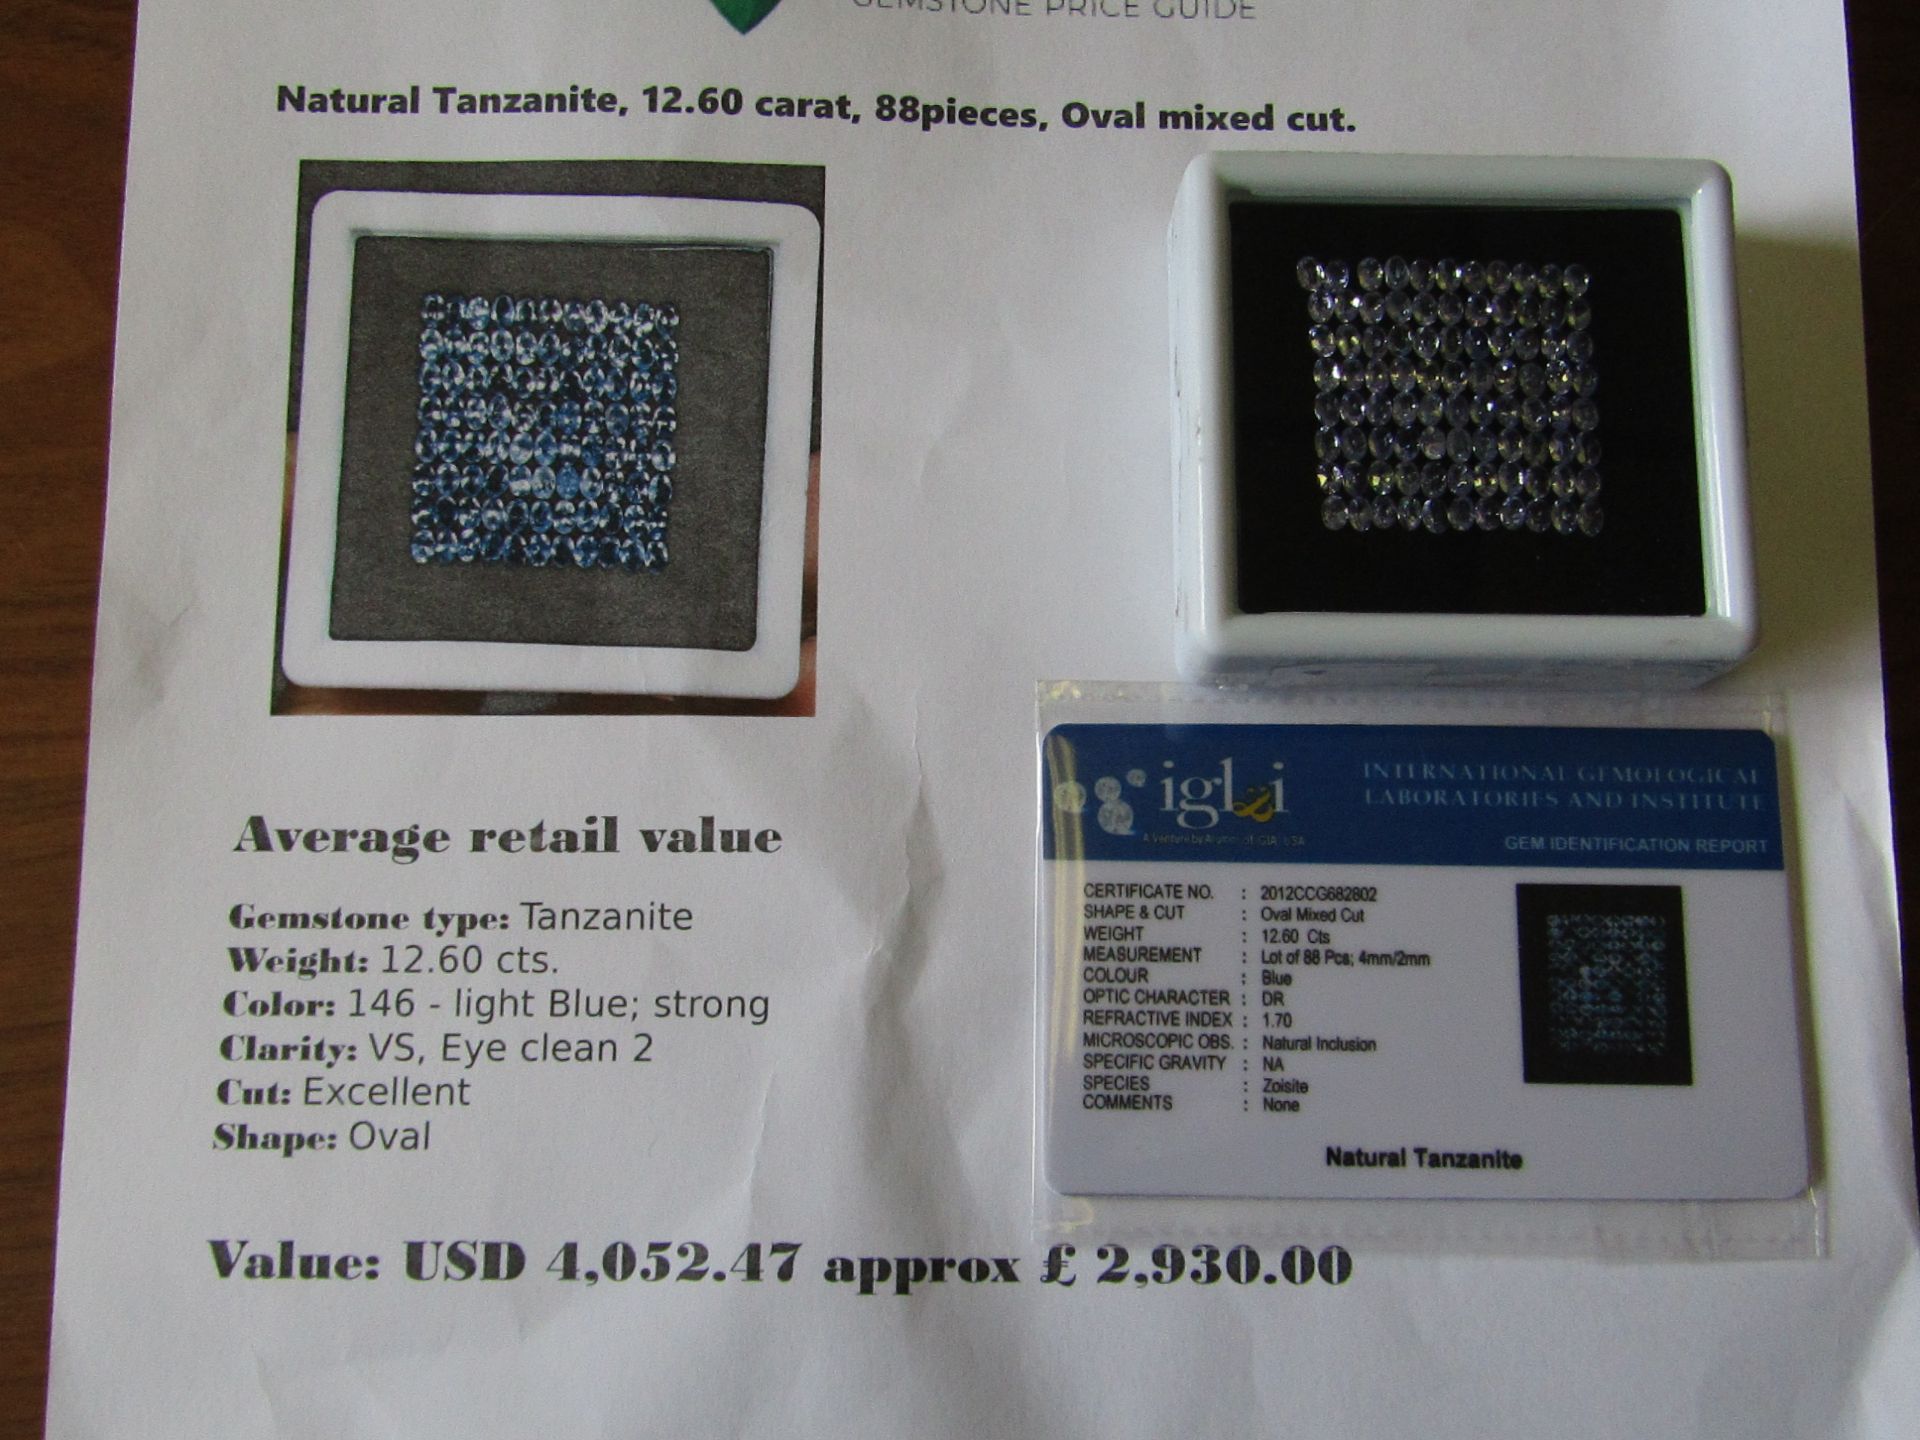 IGL&I Certified - Natural Tanzanite - 12.60 carats - 88 pieces - Average retail value £2,930.00